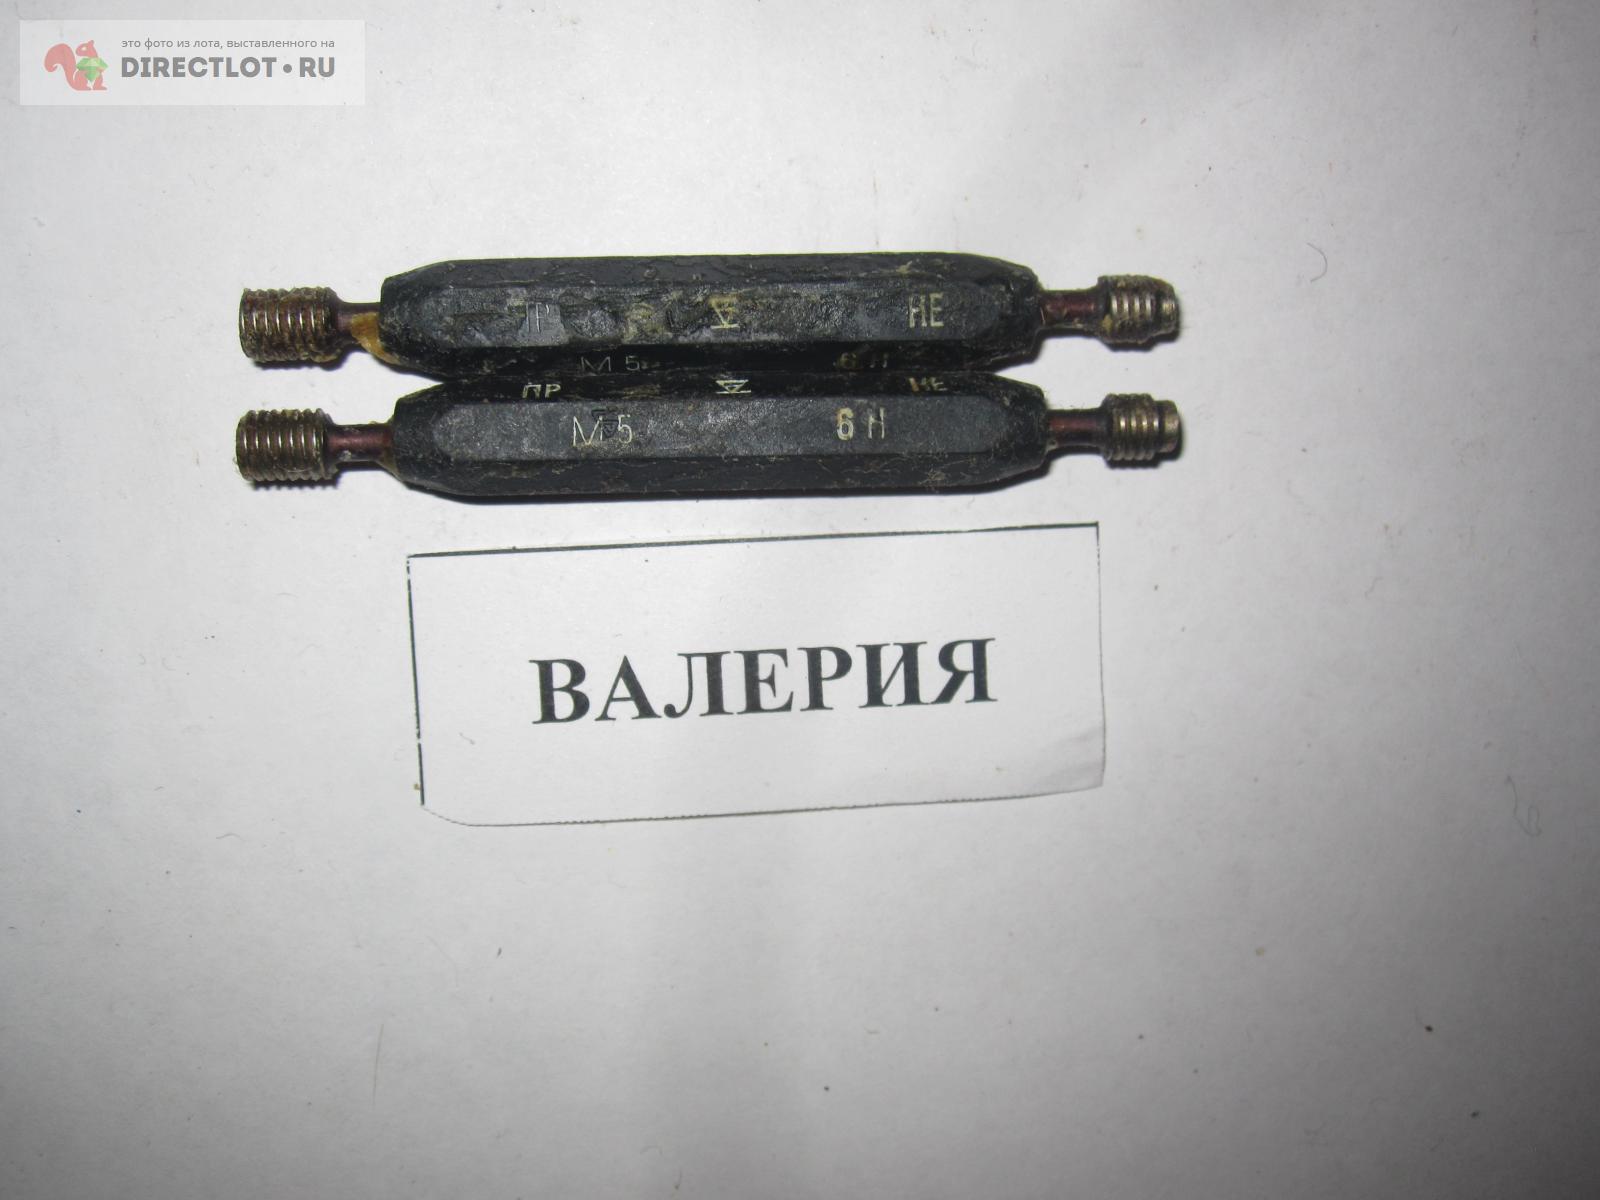 -пробка резьбовой 5х0,8 6Н ПР/НЕ  в Челябинске цена 1150 Р .